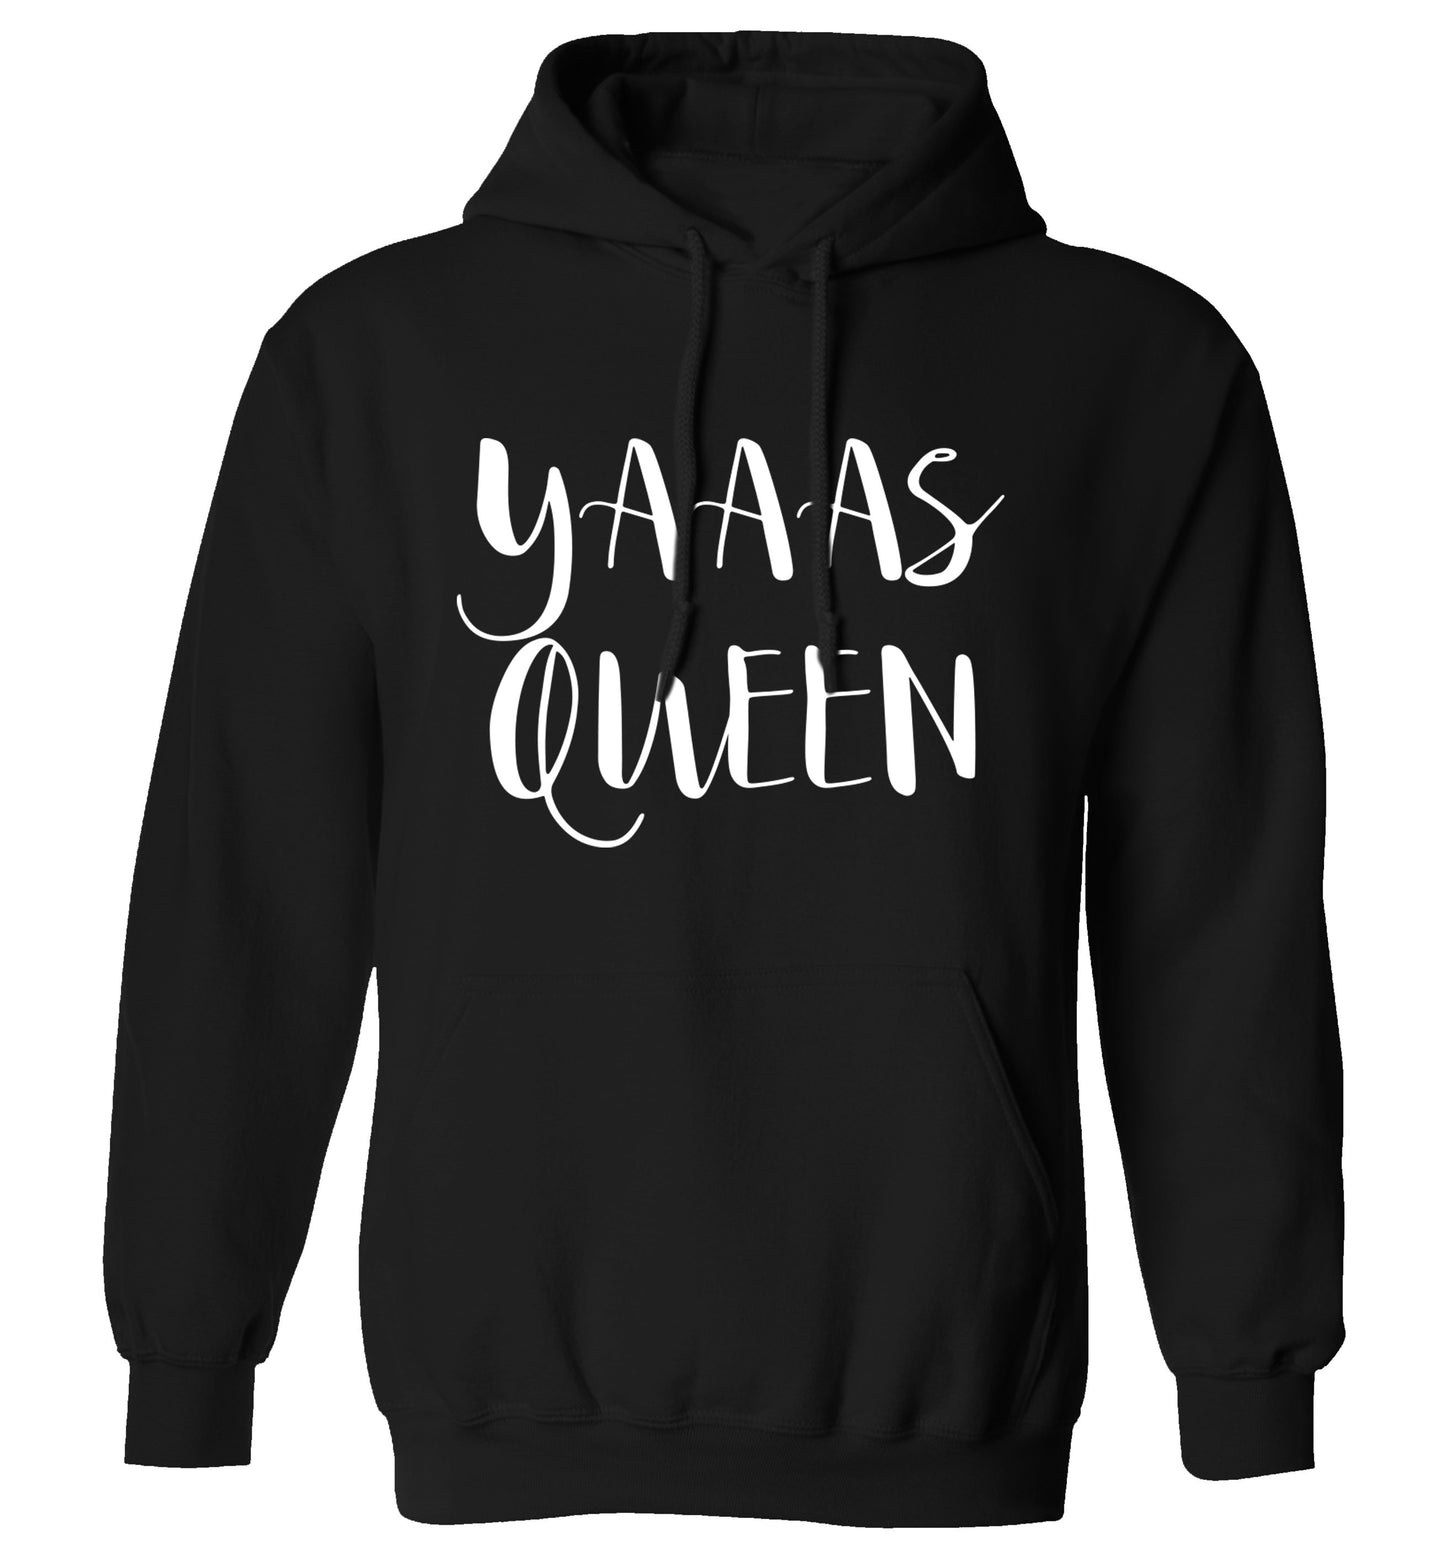 Yas Queen adults unisex black hoodie 2XL